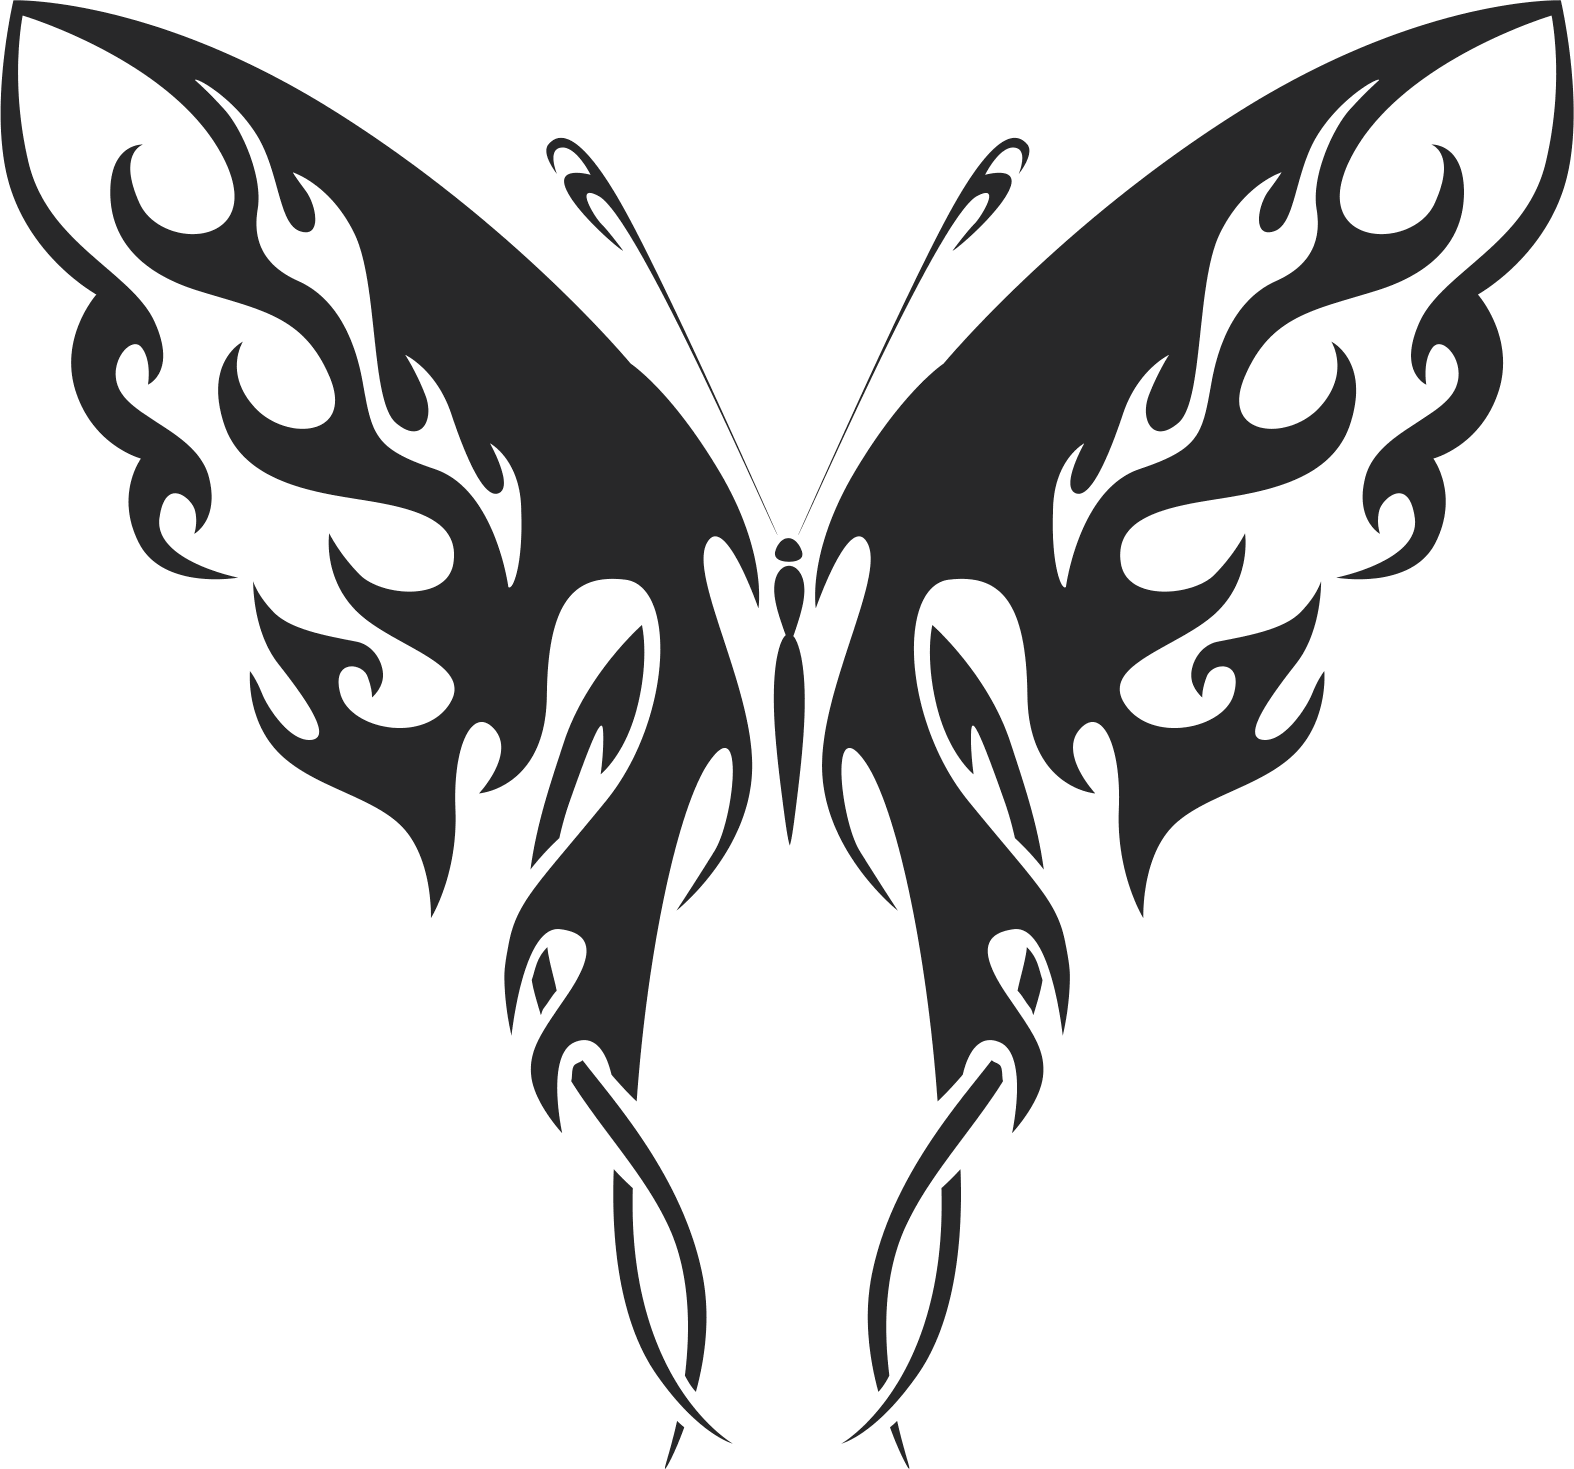 Butterfly Vector Art 041 Free Vector